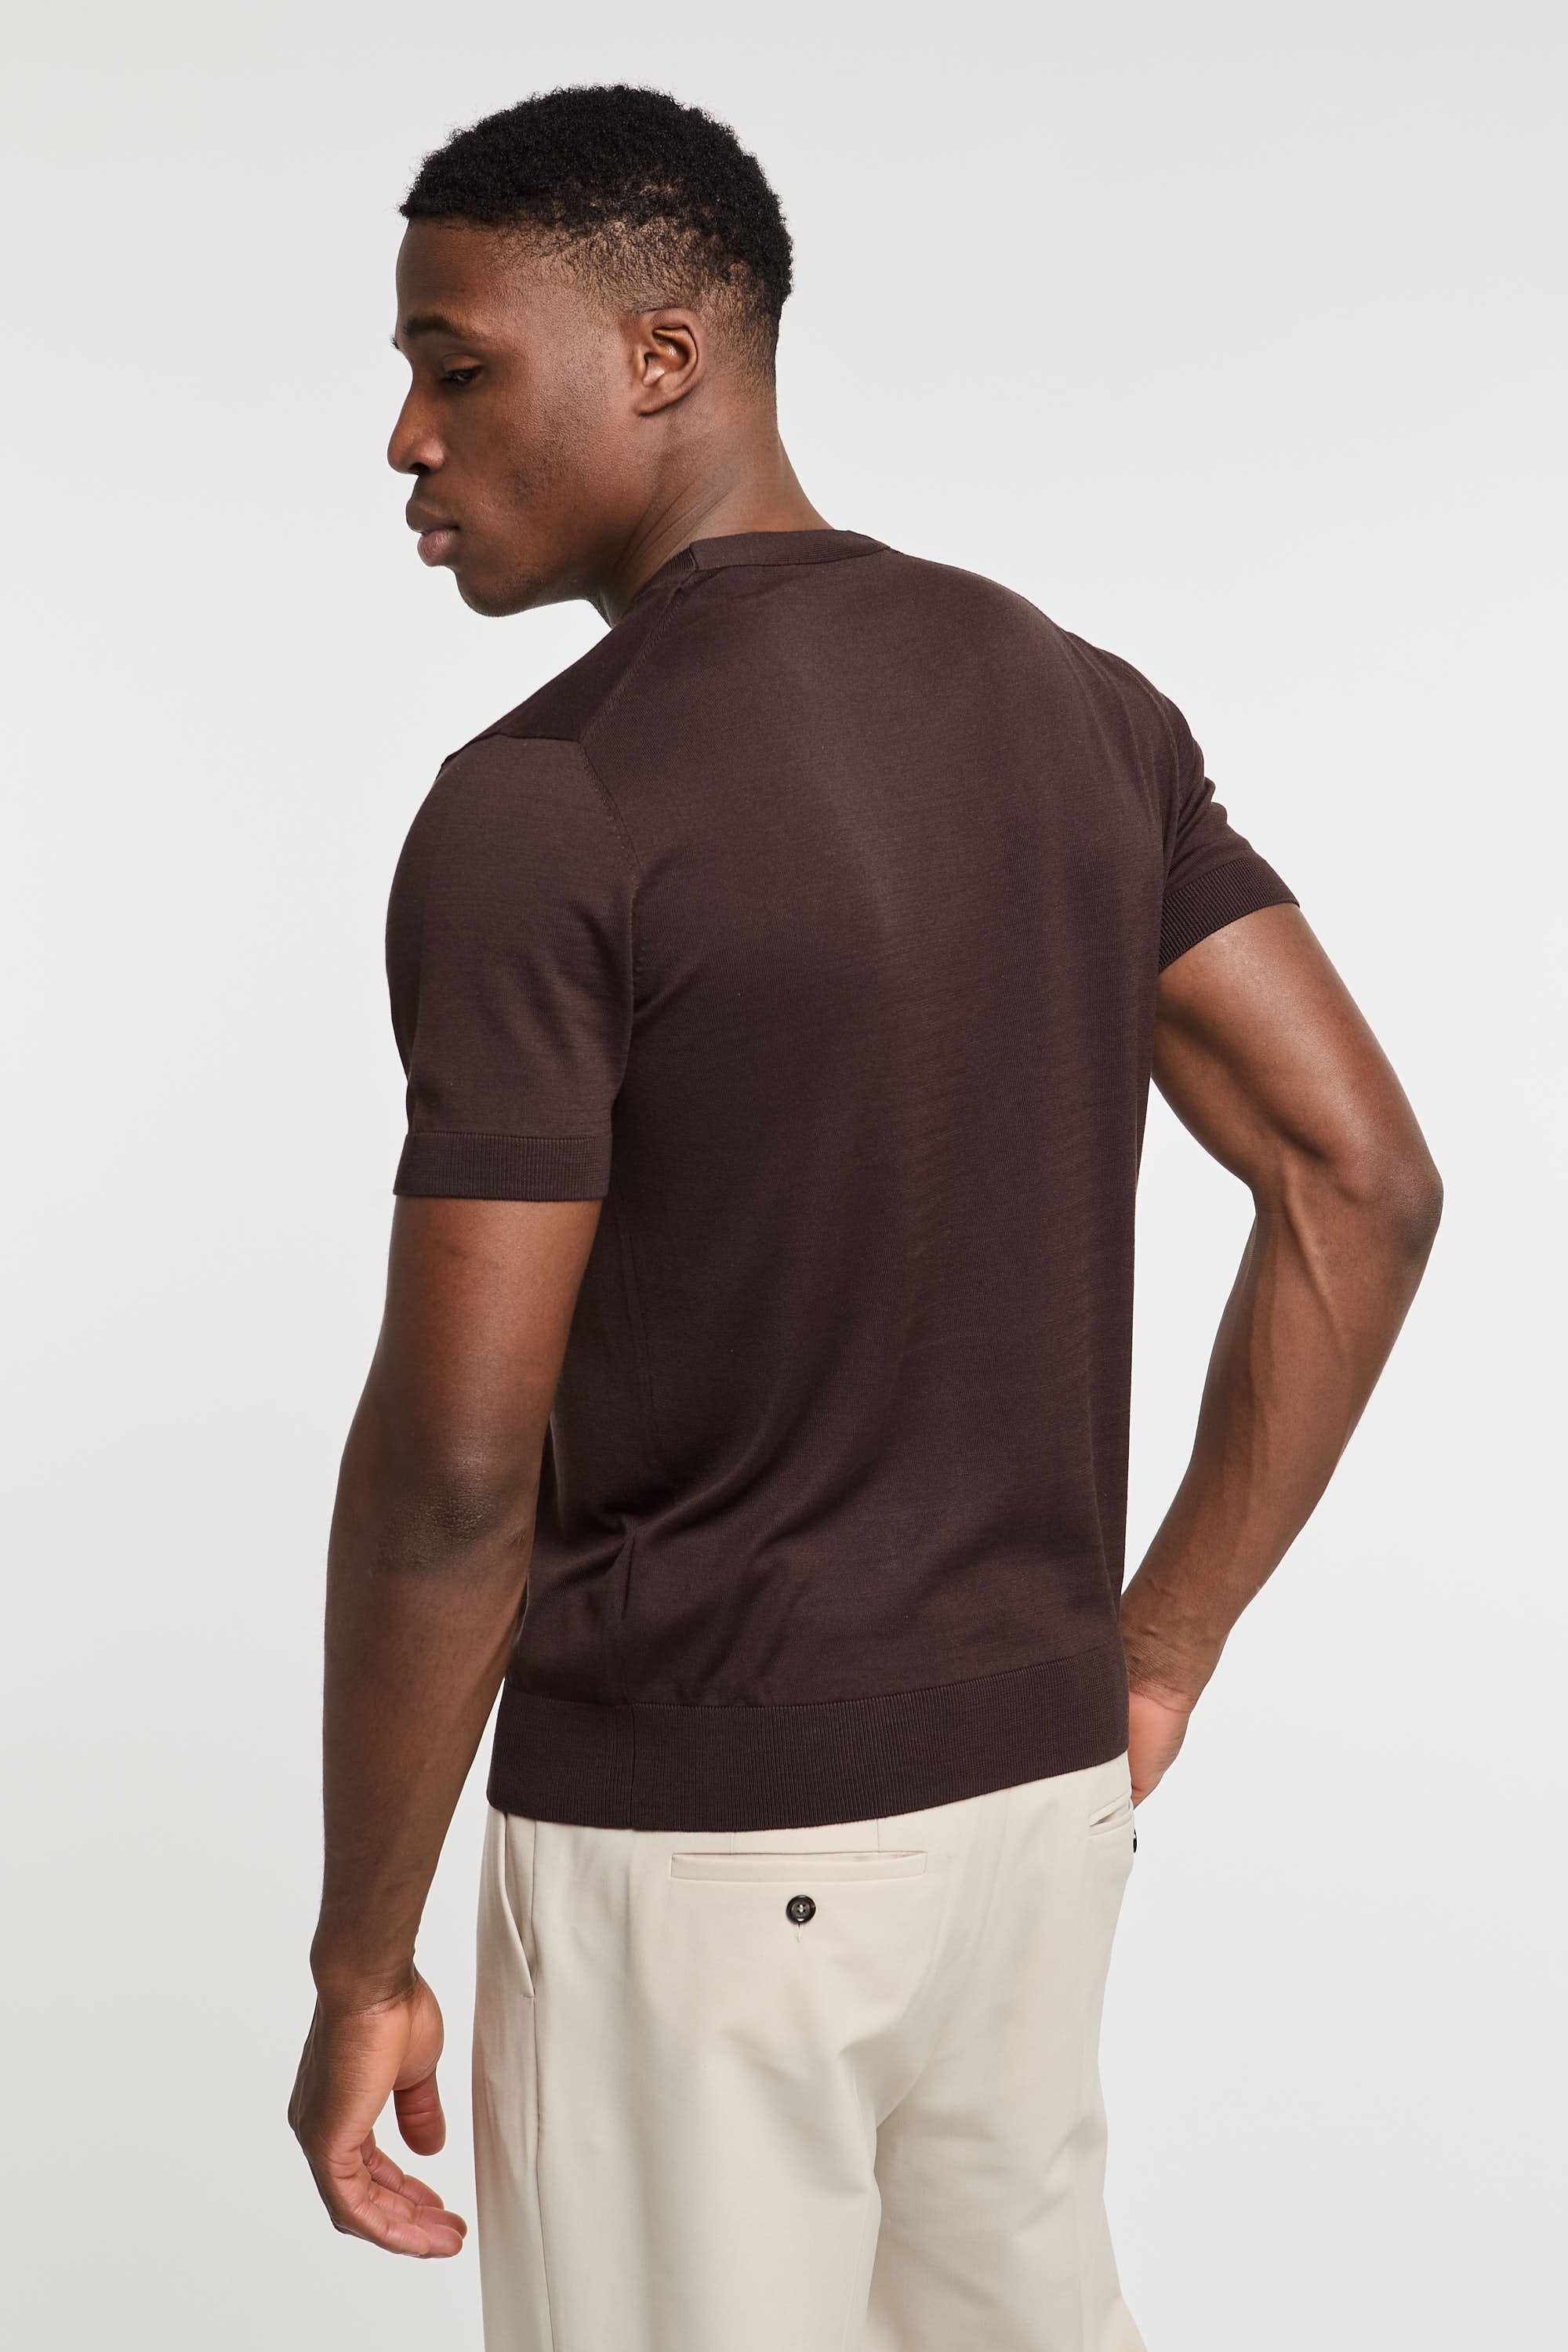 Paolo Pecora Silk/Cotton Blend Brown T-Shirt-4